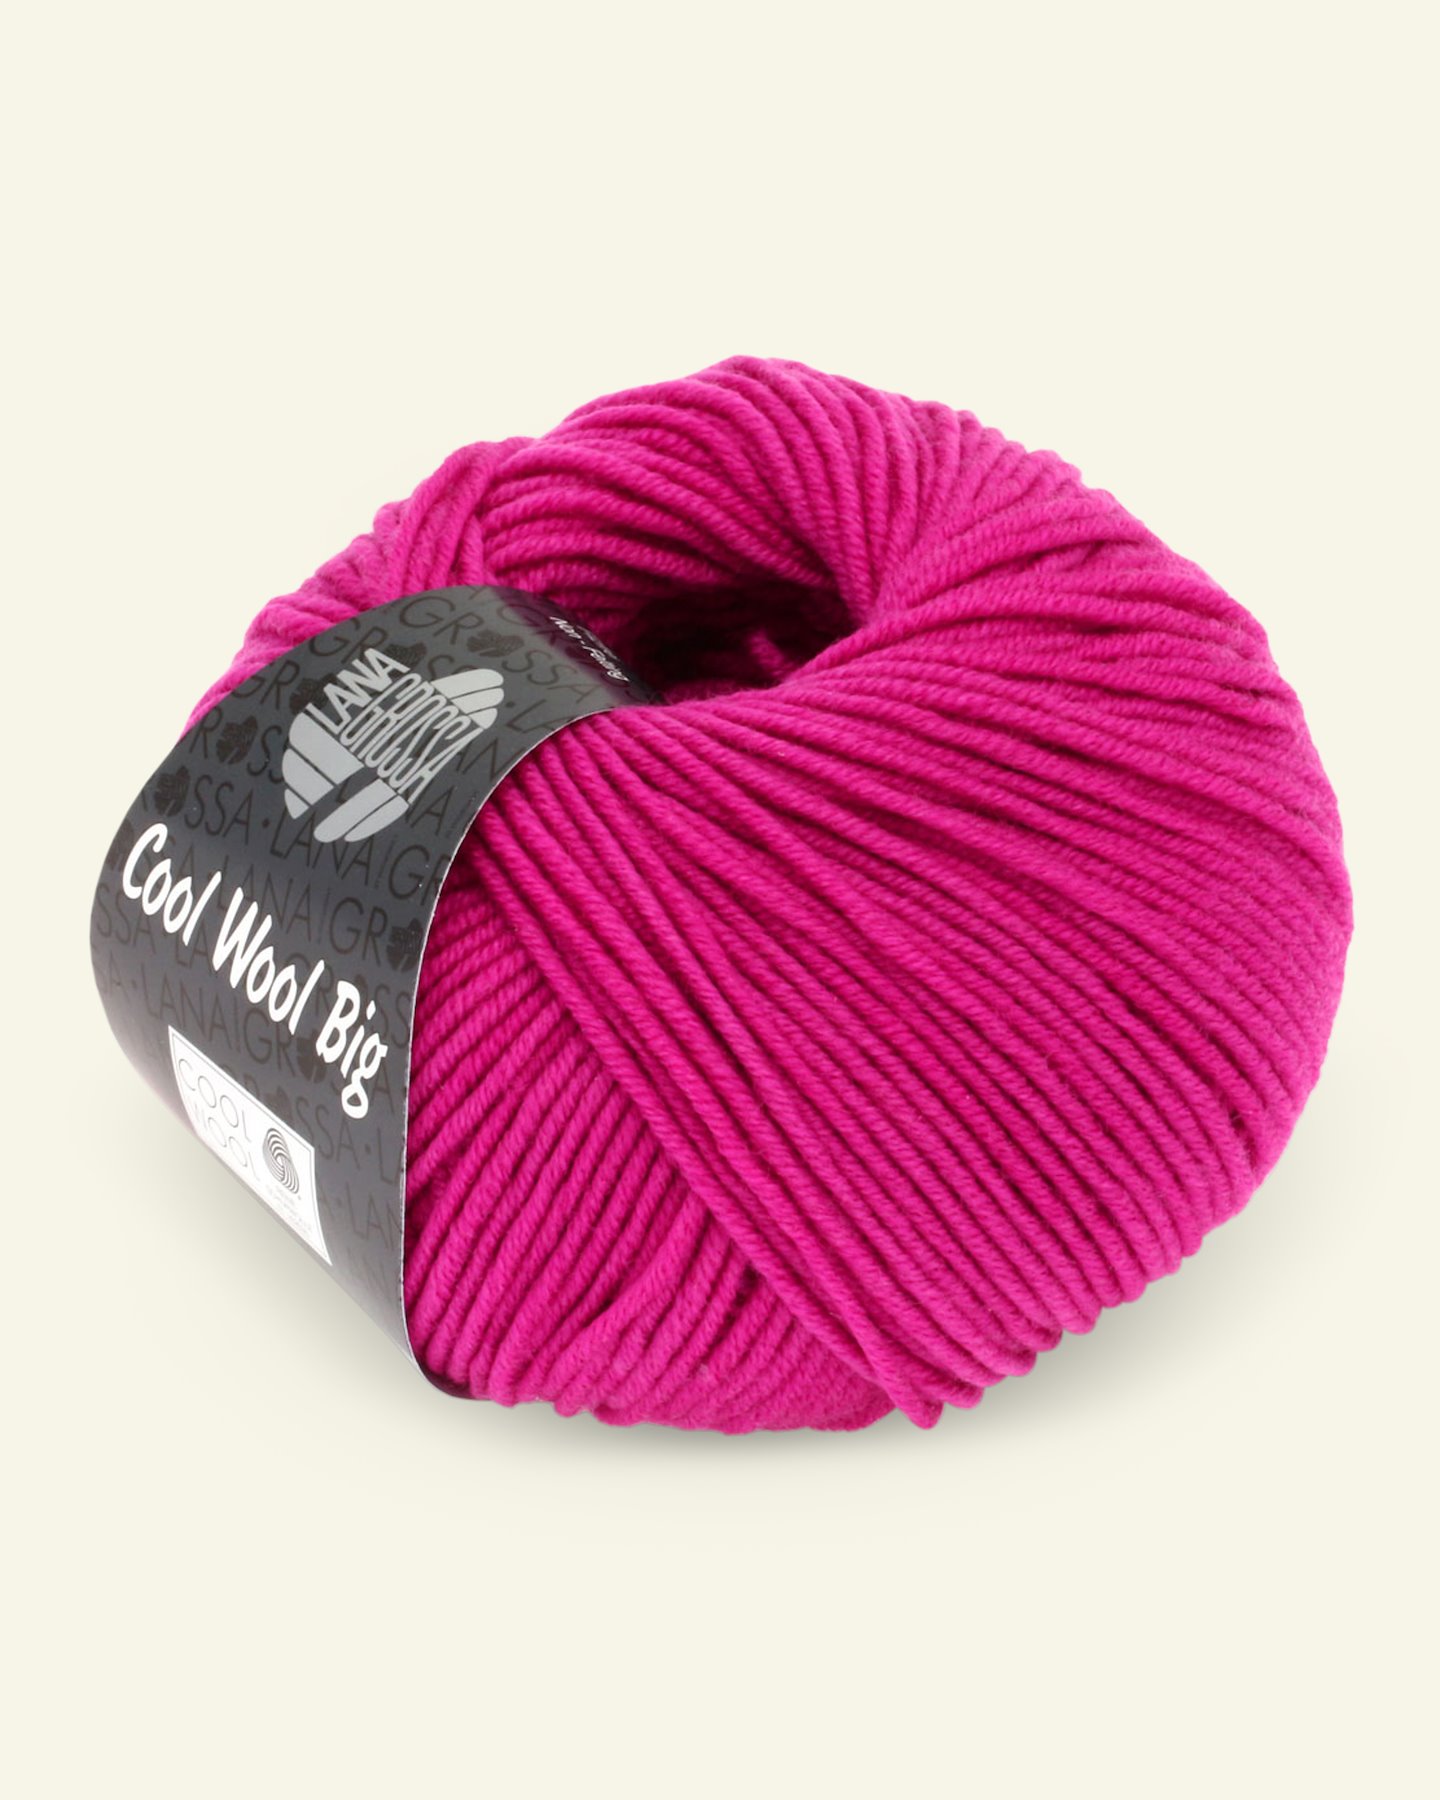 Lana Grossa, extrafine merino wool yarn "Cool Wool Big", warm pink 90001101_pack